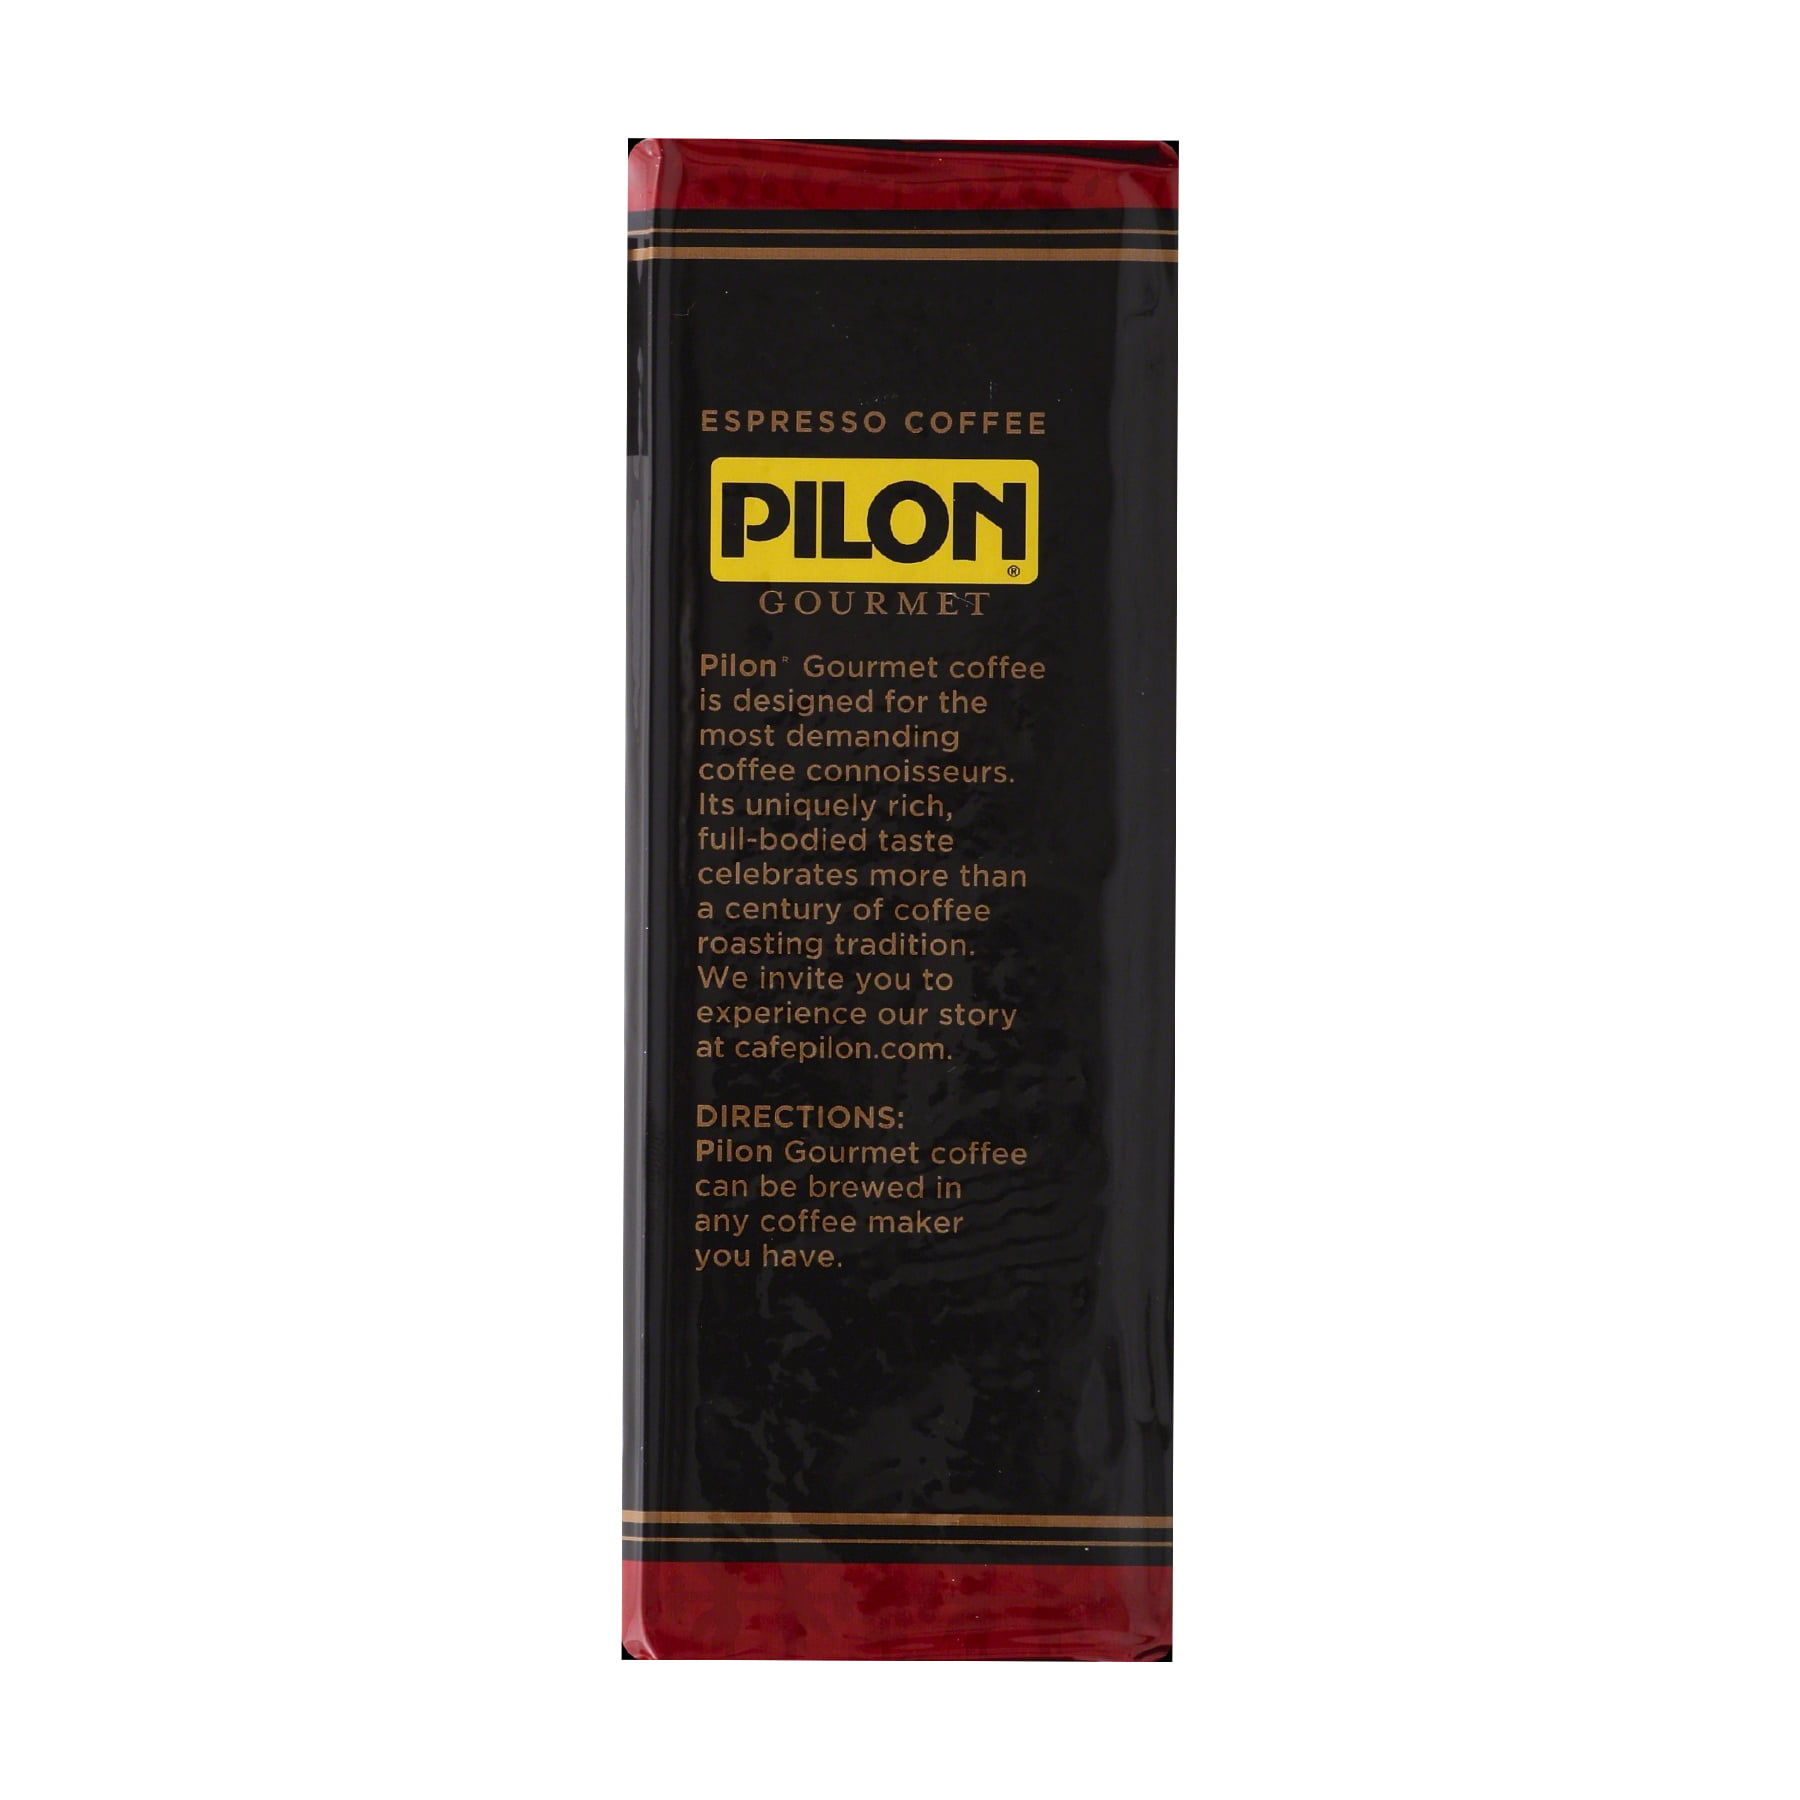 Pilon Instant Coffee 7.05 oz . FREE SHIPPING Espresso Style